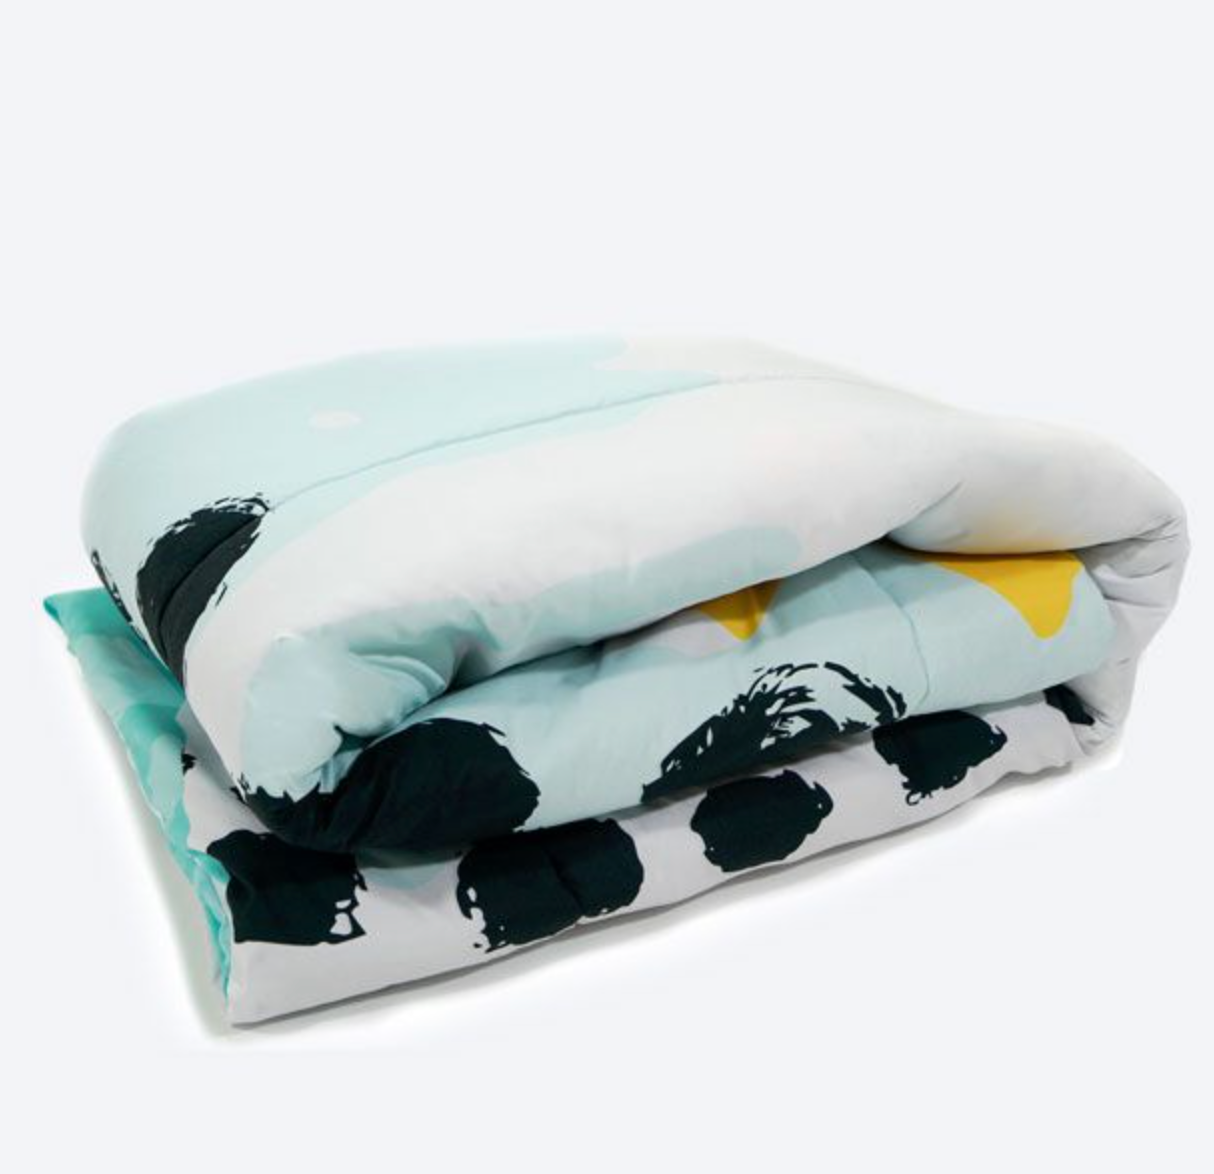 Comforter Vintage Softball 1 Custom Bedding Set for Kids Teens Adult Personalized Premium Bed Set